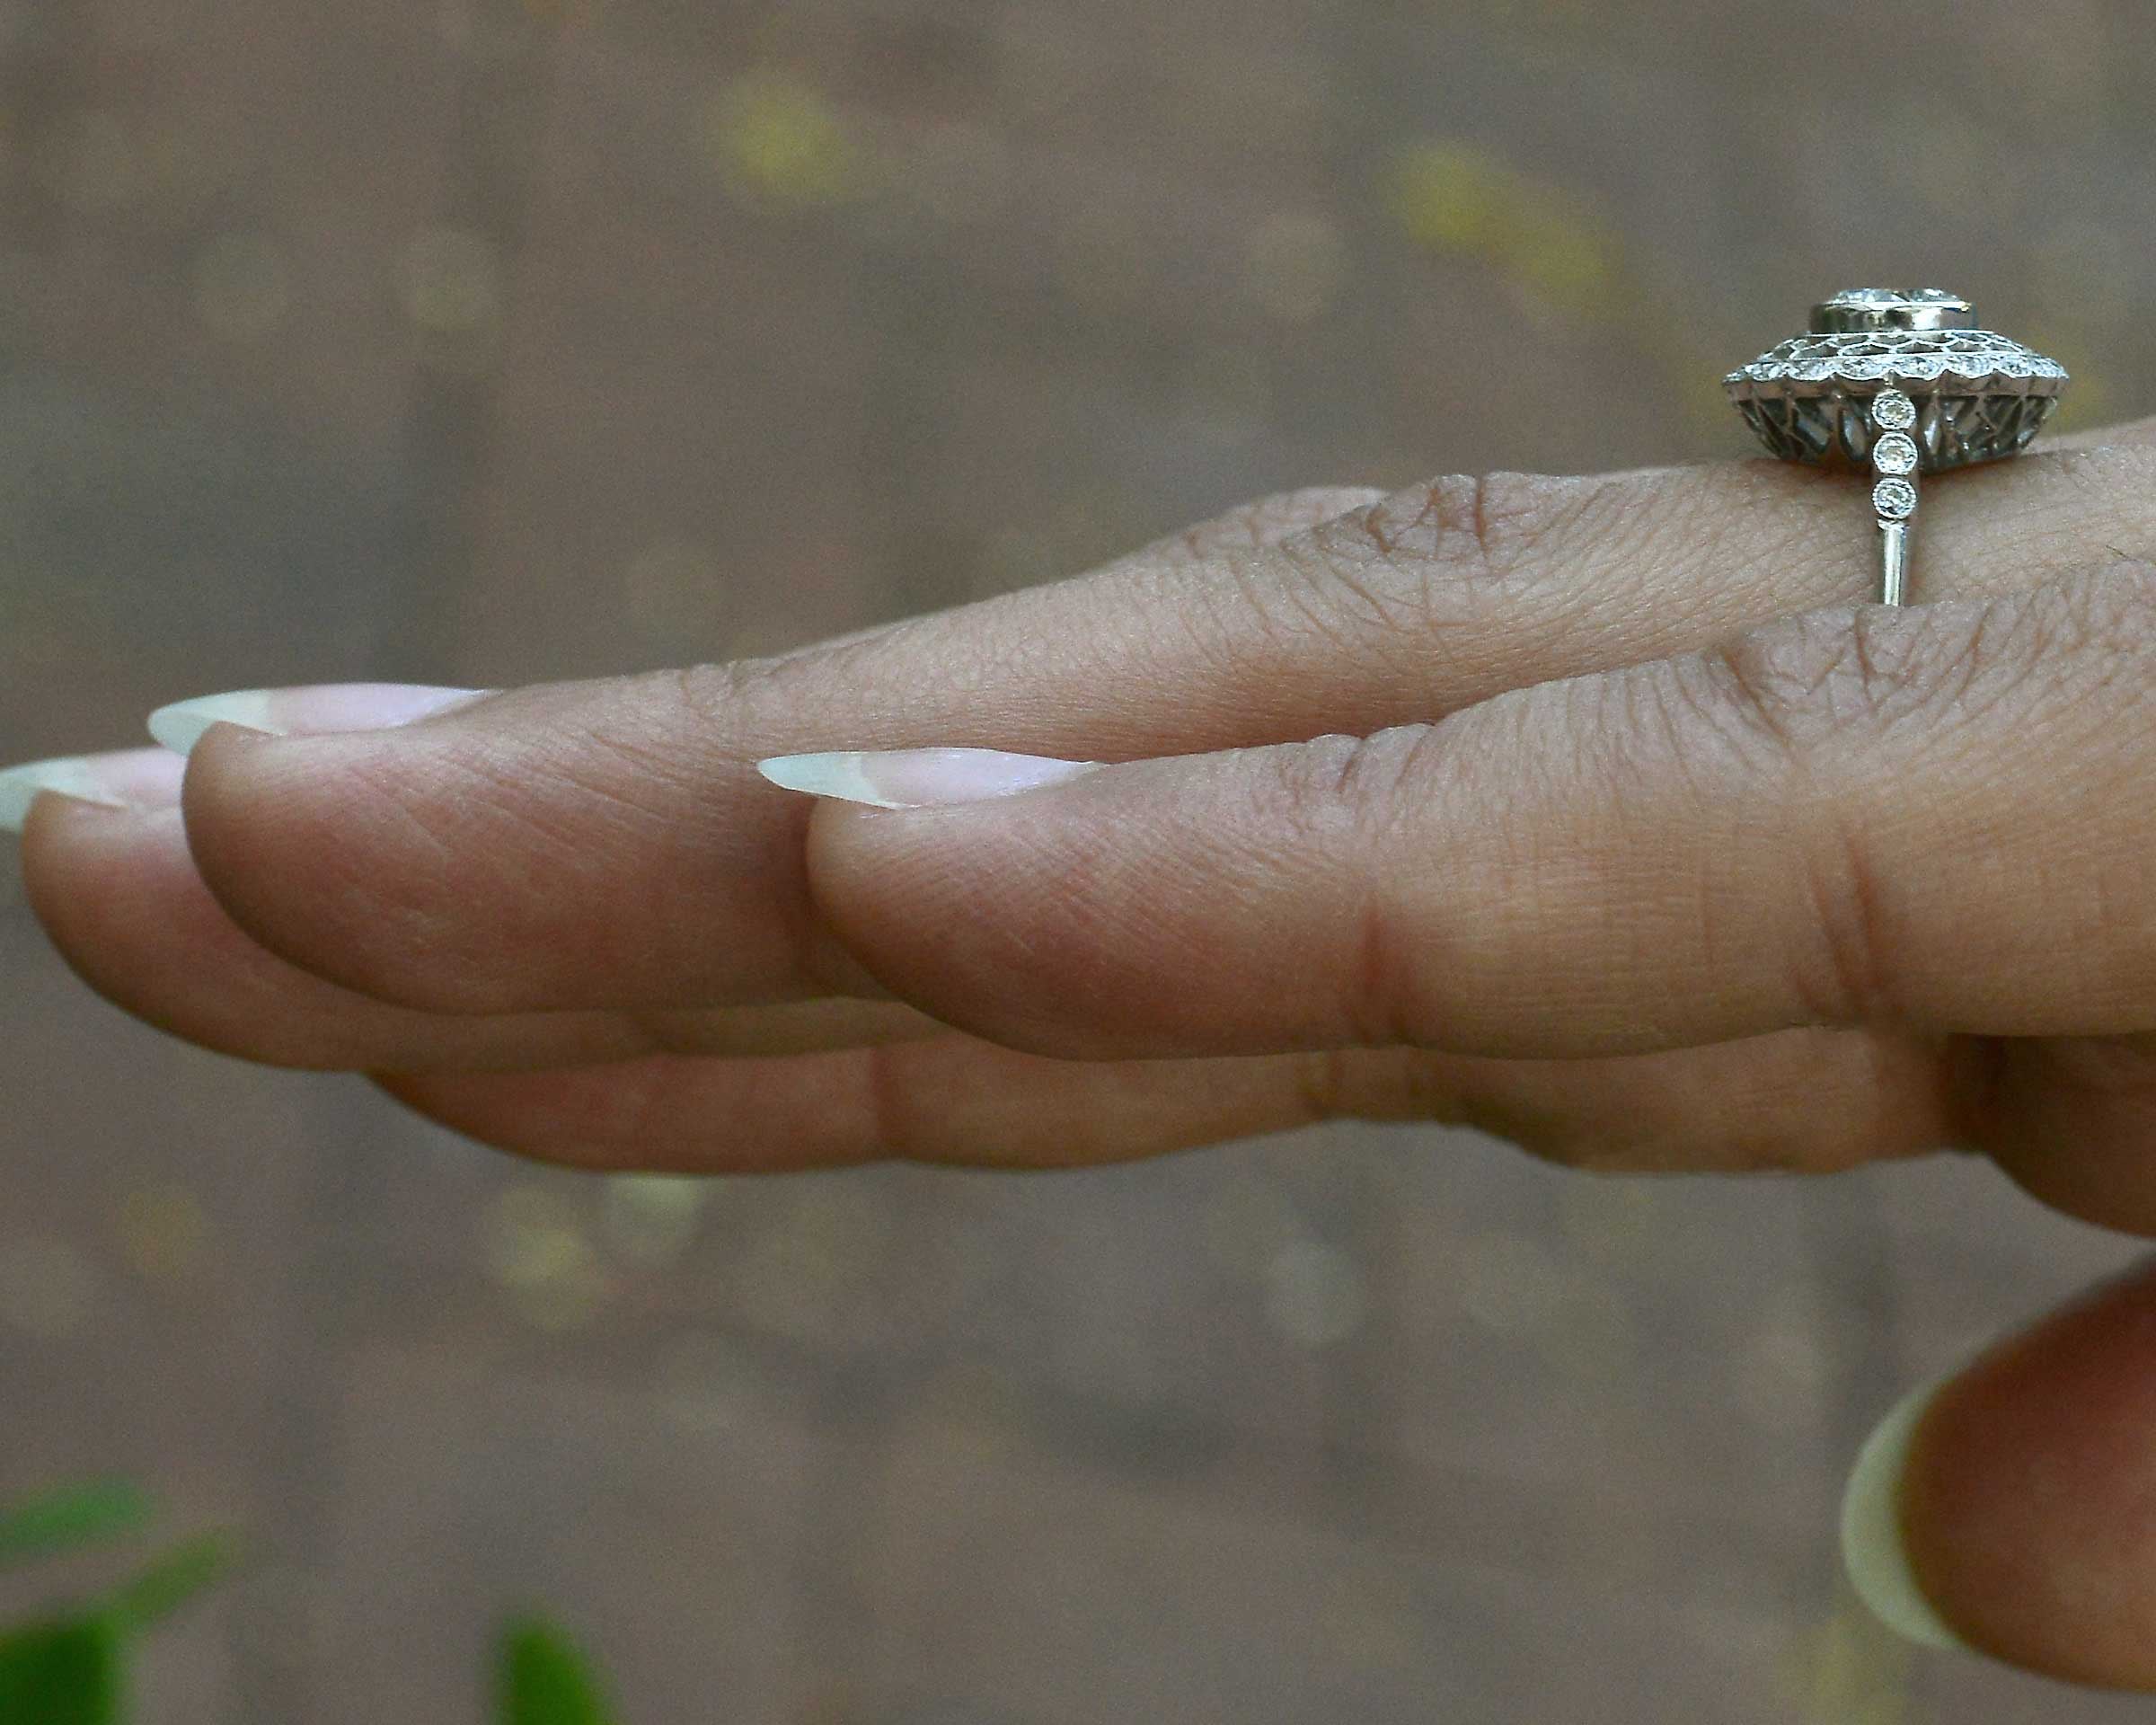 An Edwardian style laced halo diamond engagement ring.